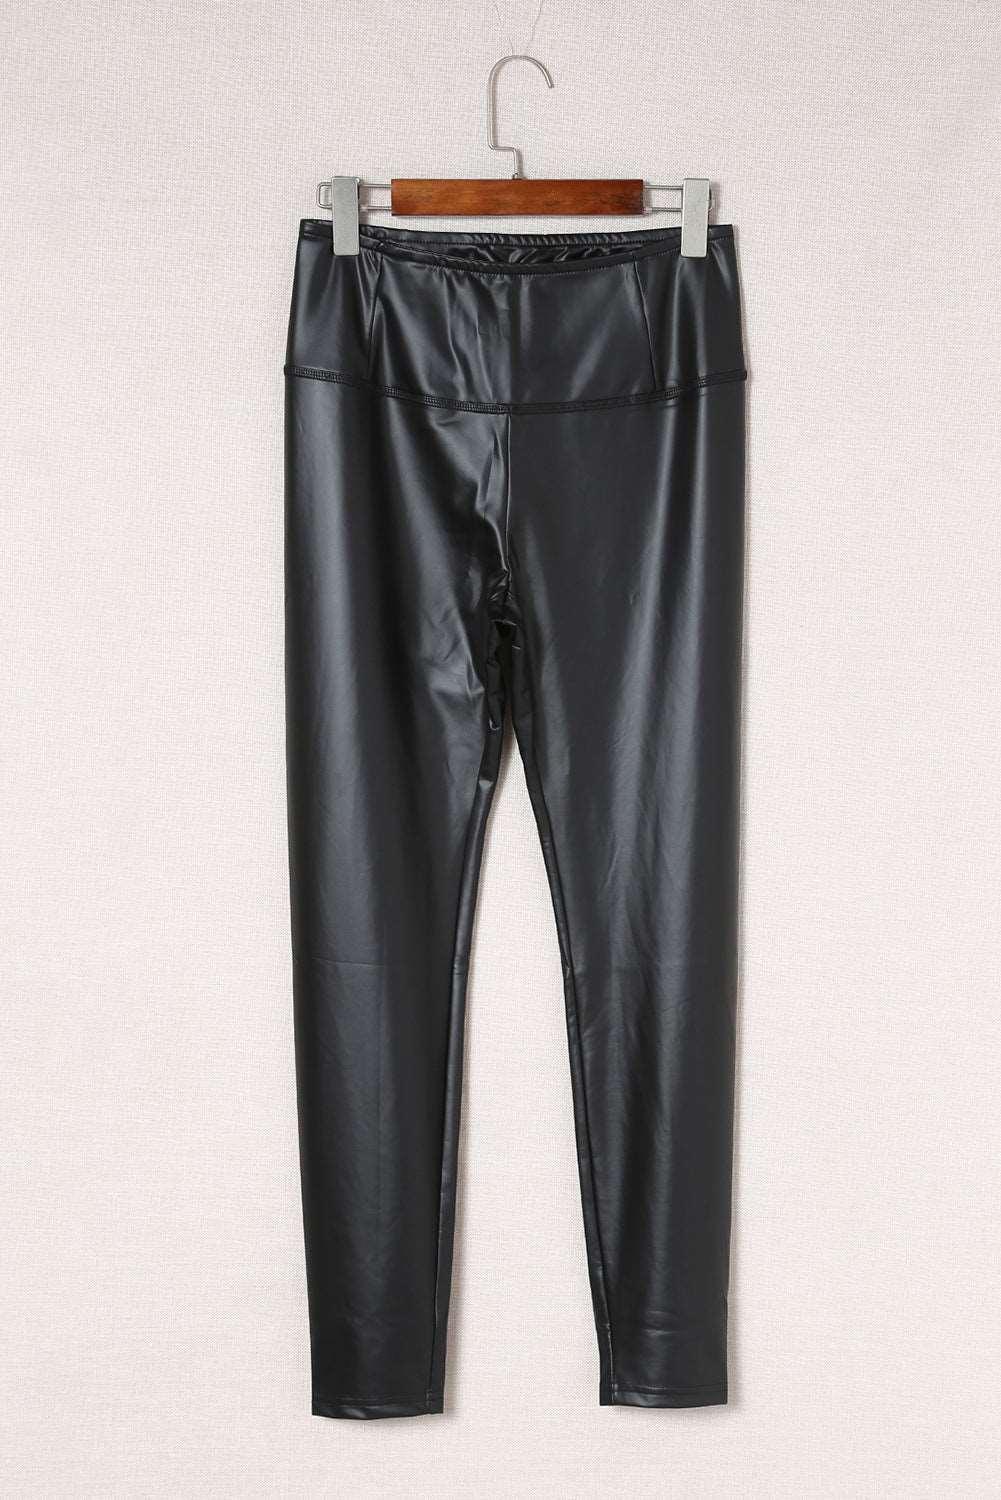 Black Faux Leather Casual High Waisted Leggings - Vesteeto